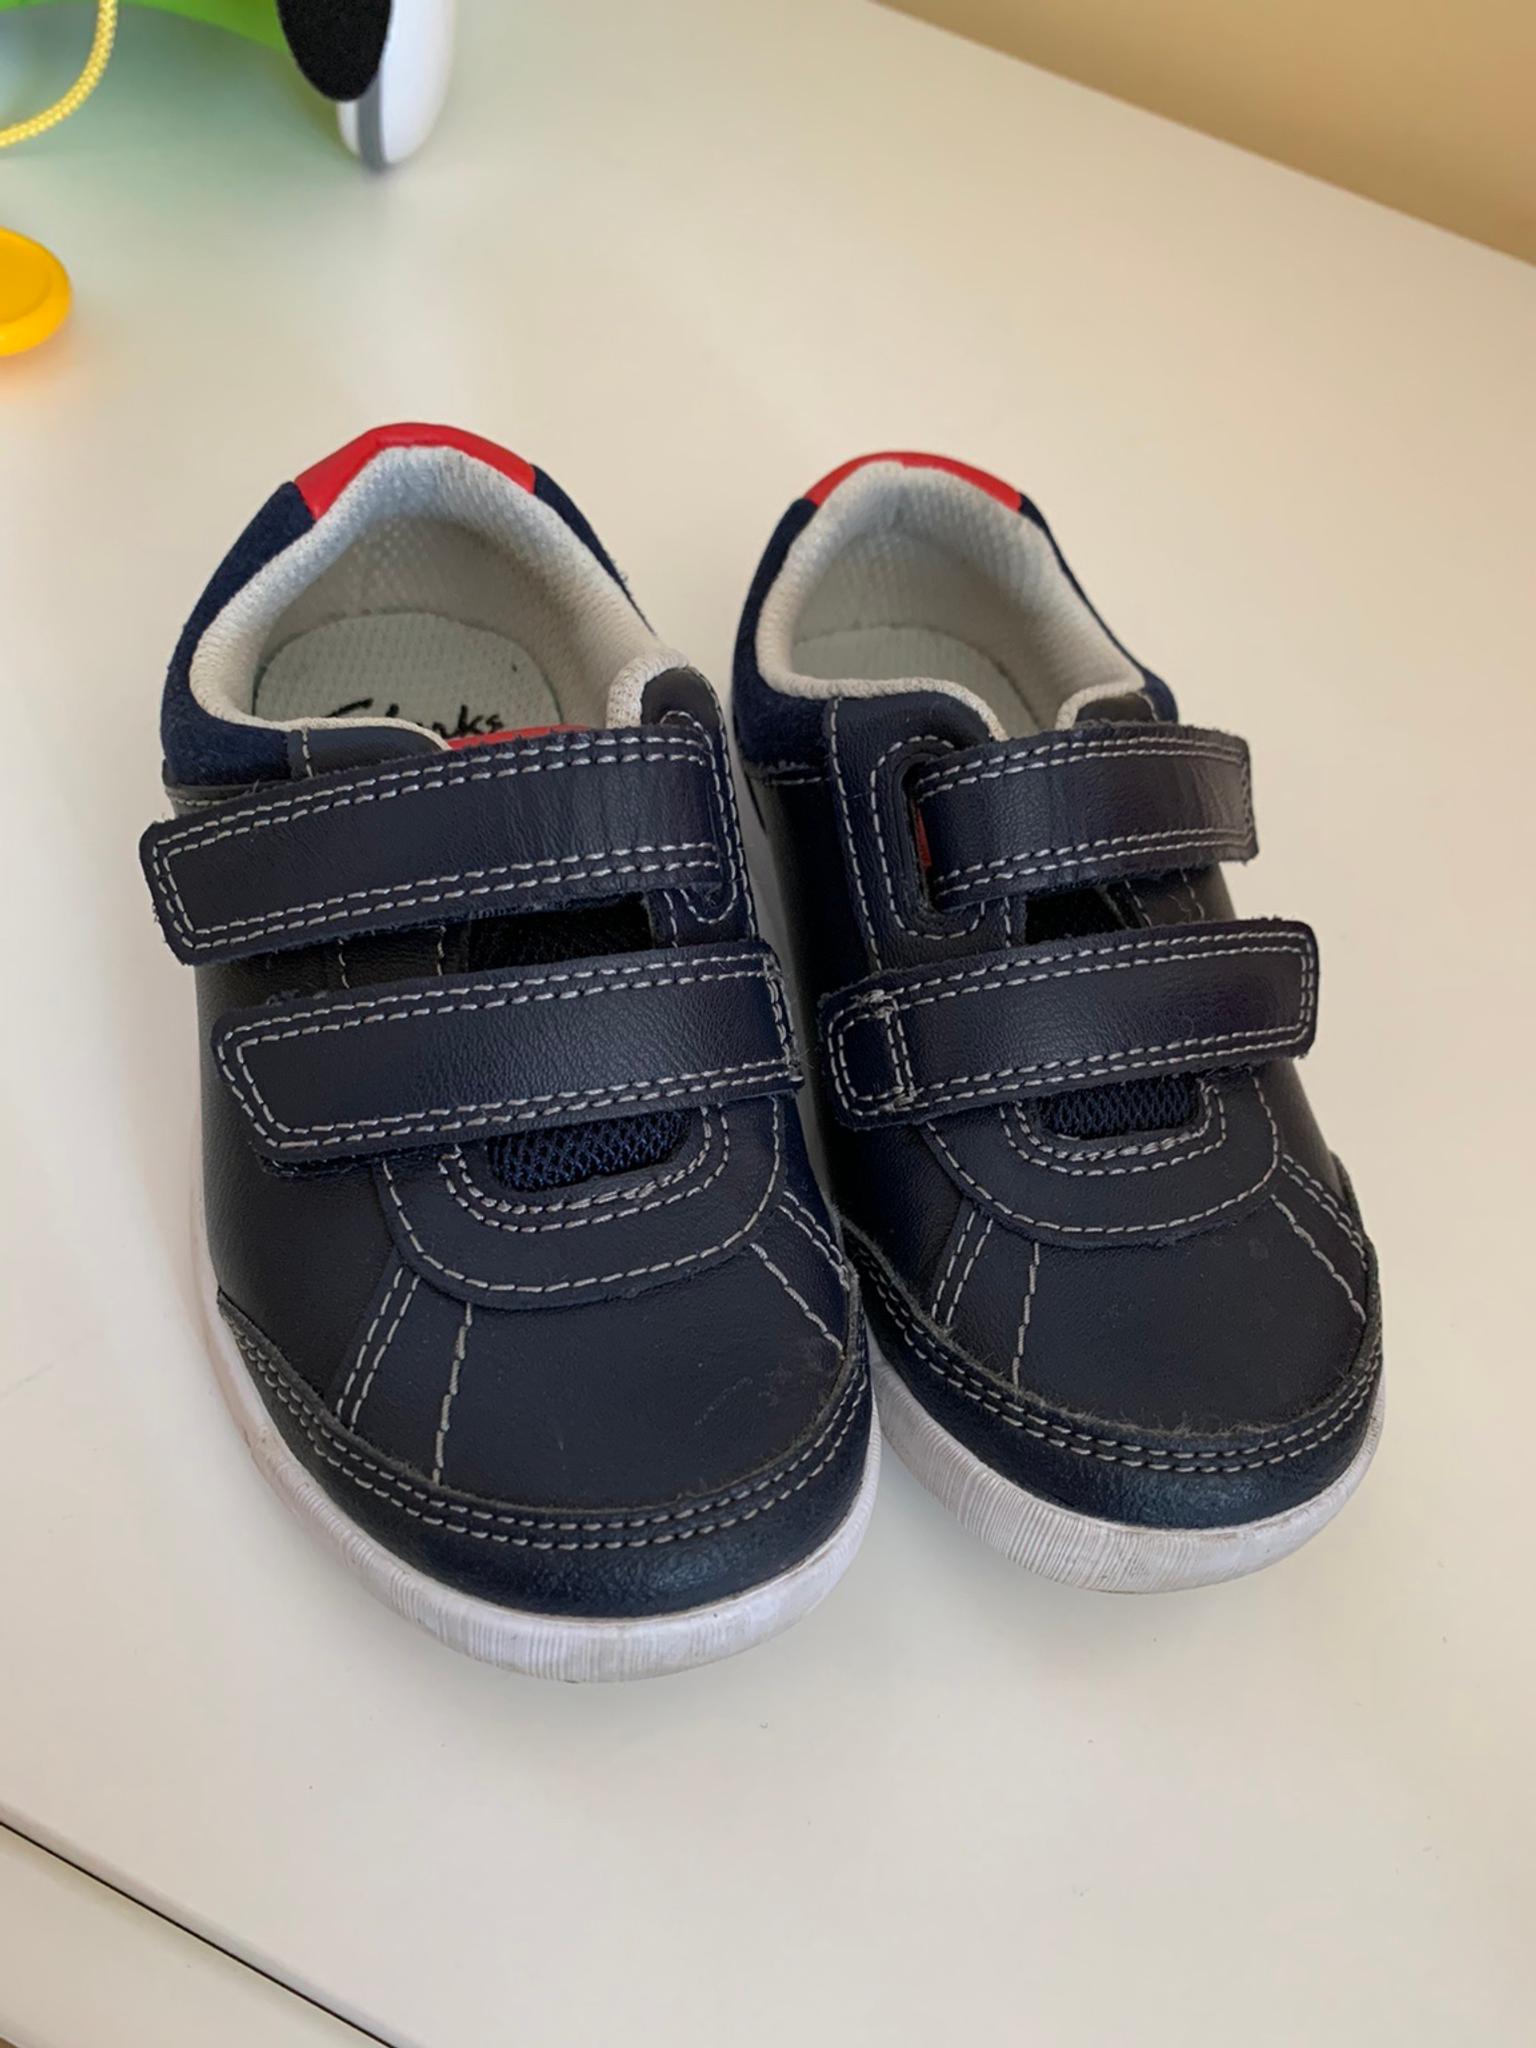 clarks baby sandals sale